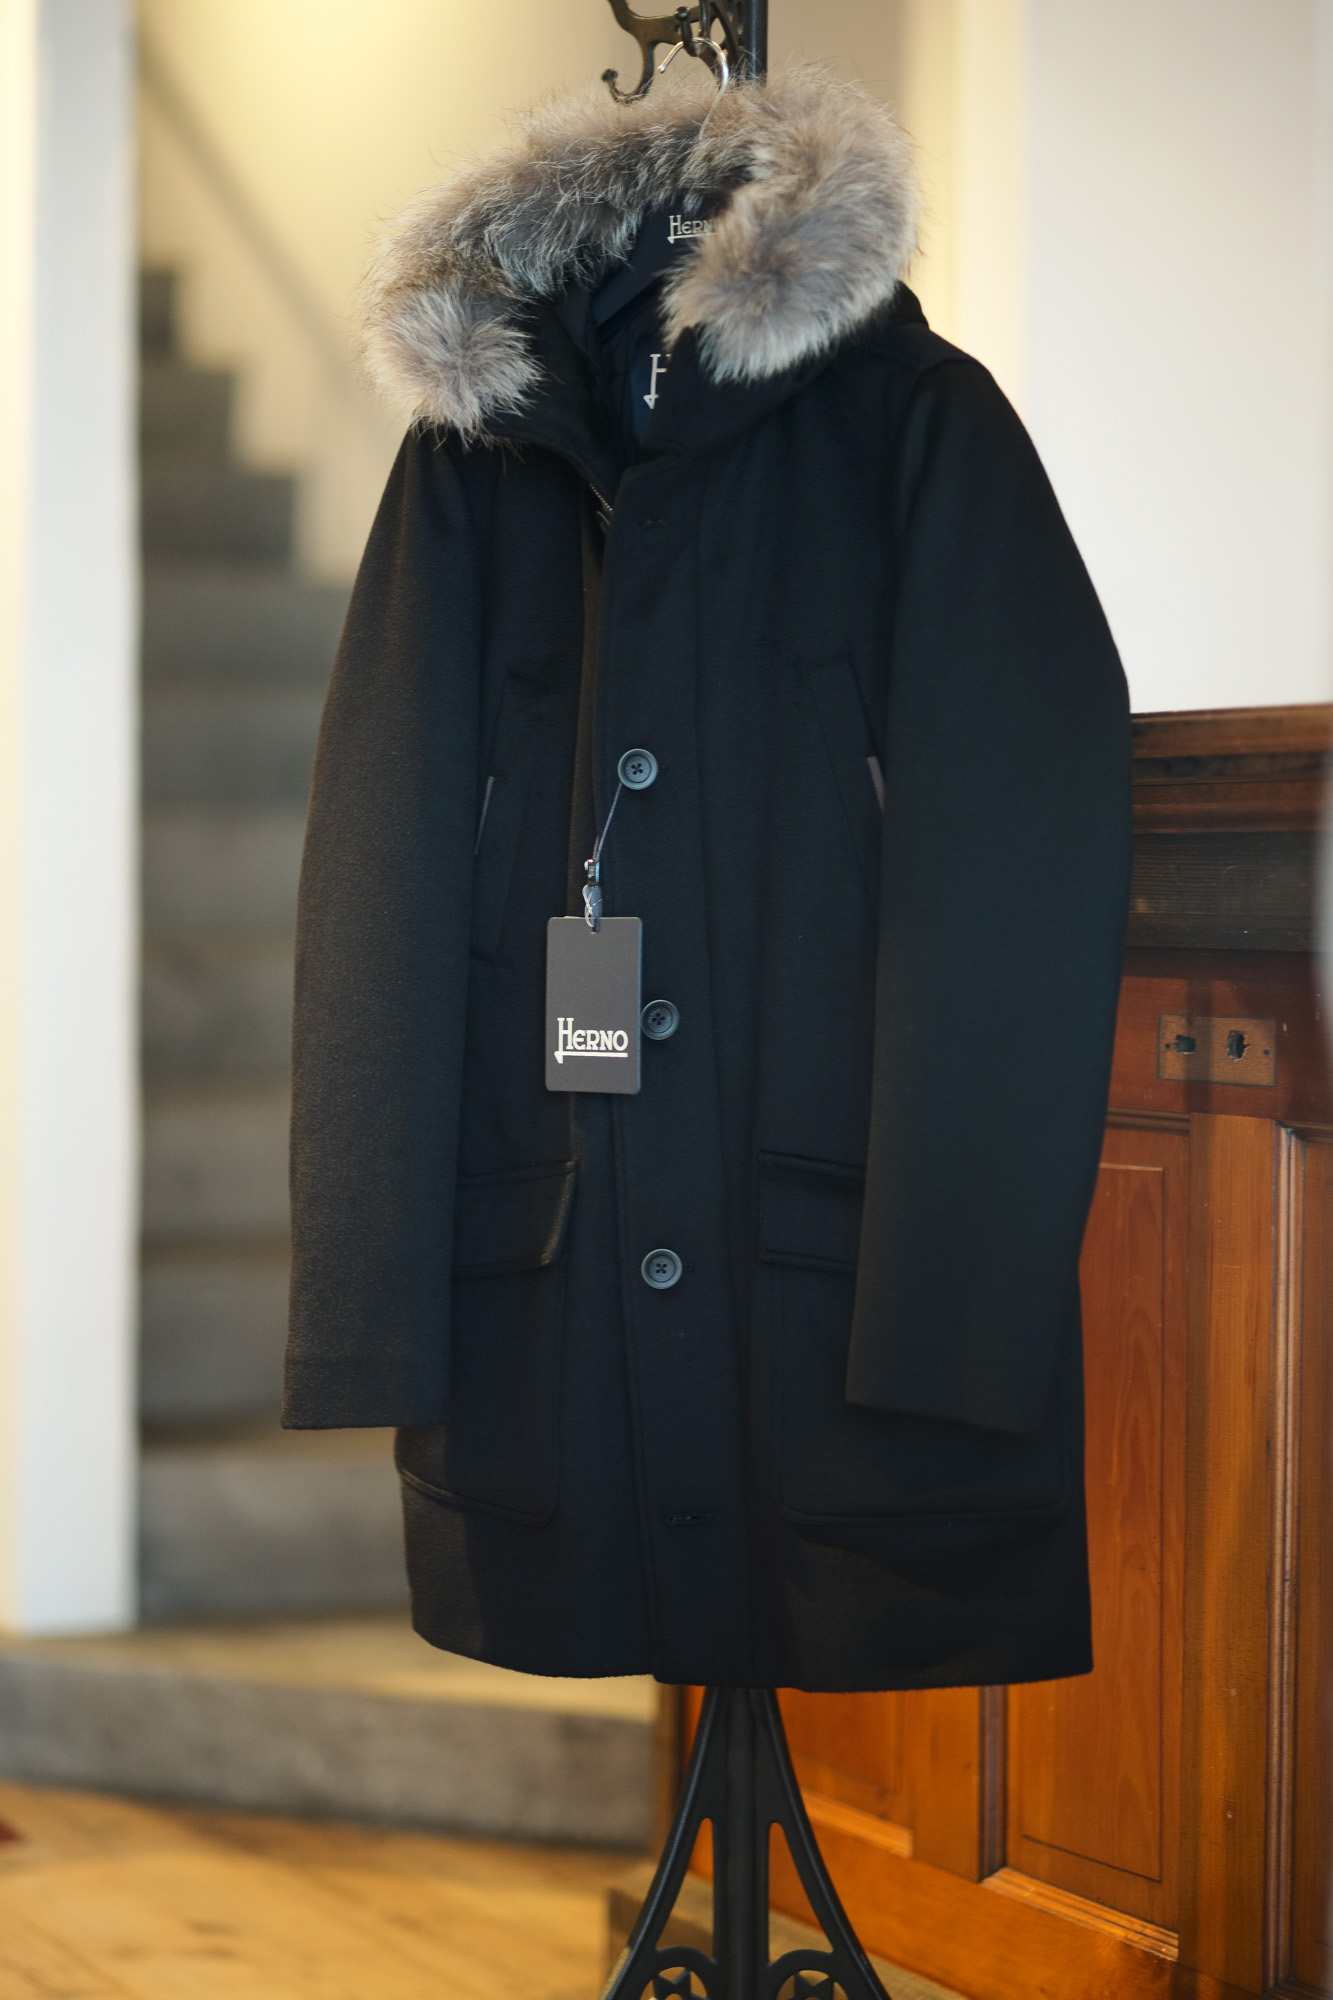 HERNO(ヘルノ) N-3B Cashmere coat (カシミア コート) LUIGI COLOMBO